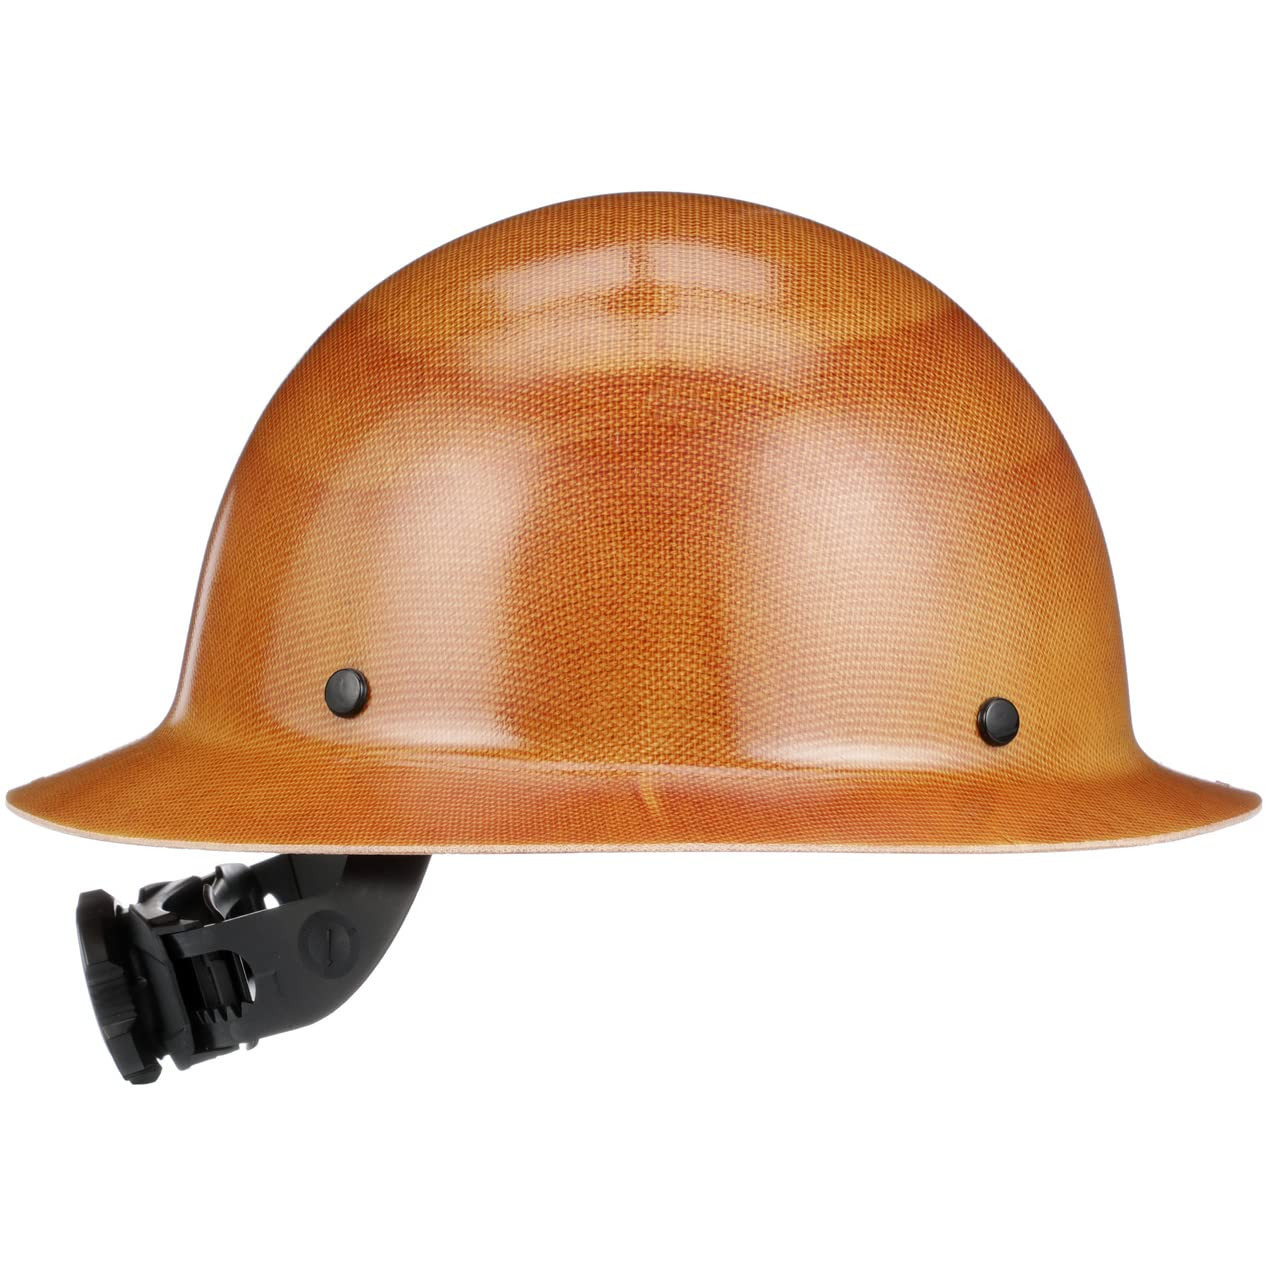 MSA 475407 Tan Skullgard Full Brim Hard Hat with Fas-Trac Suspension